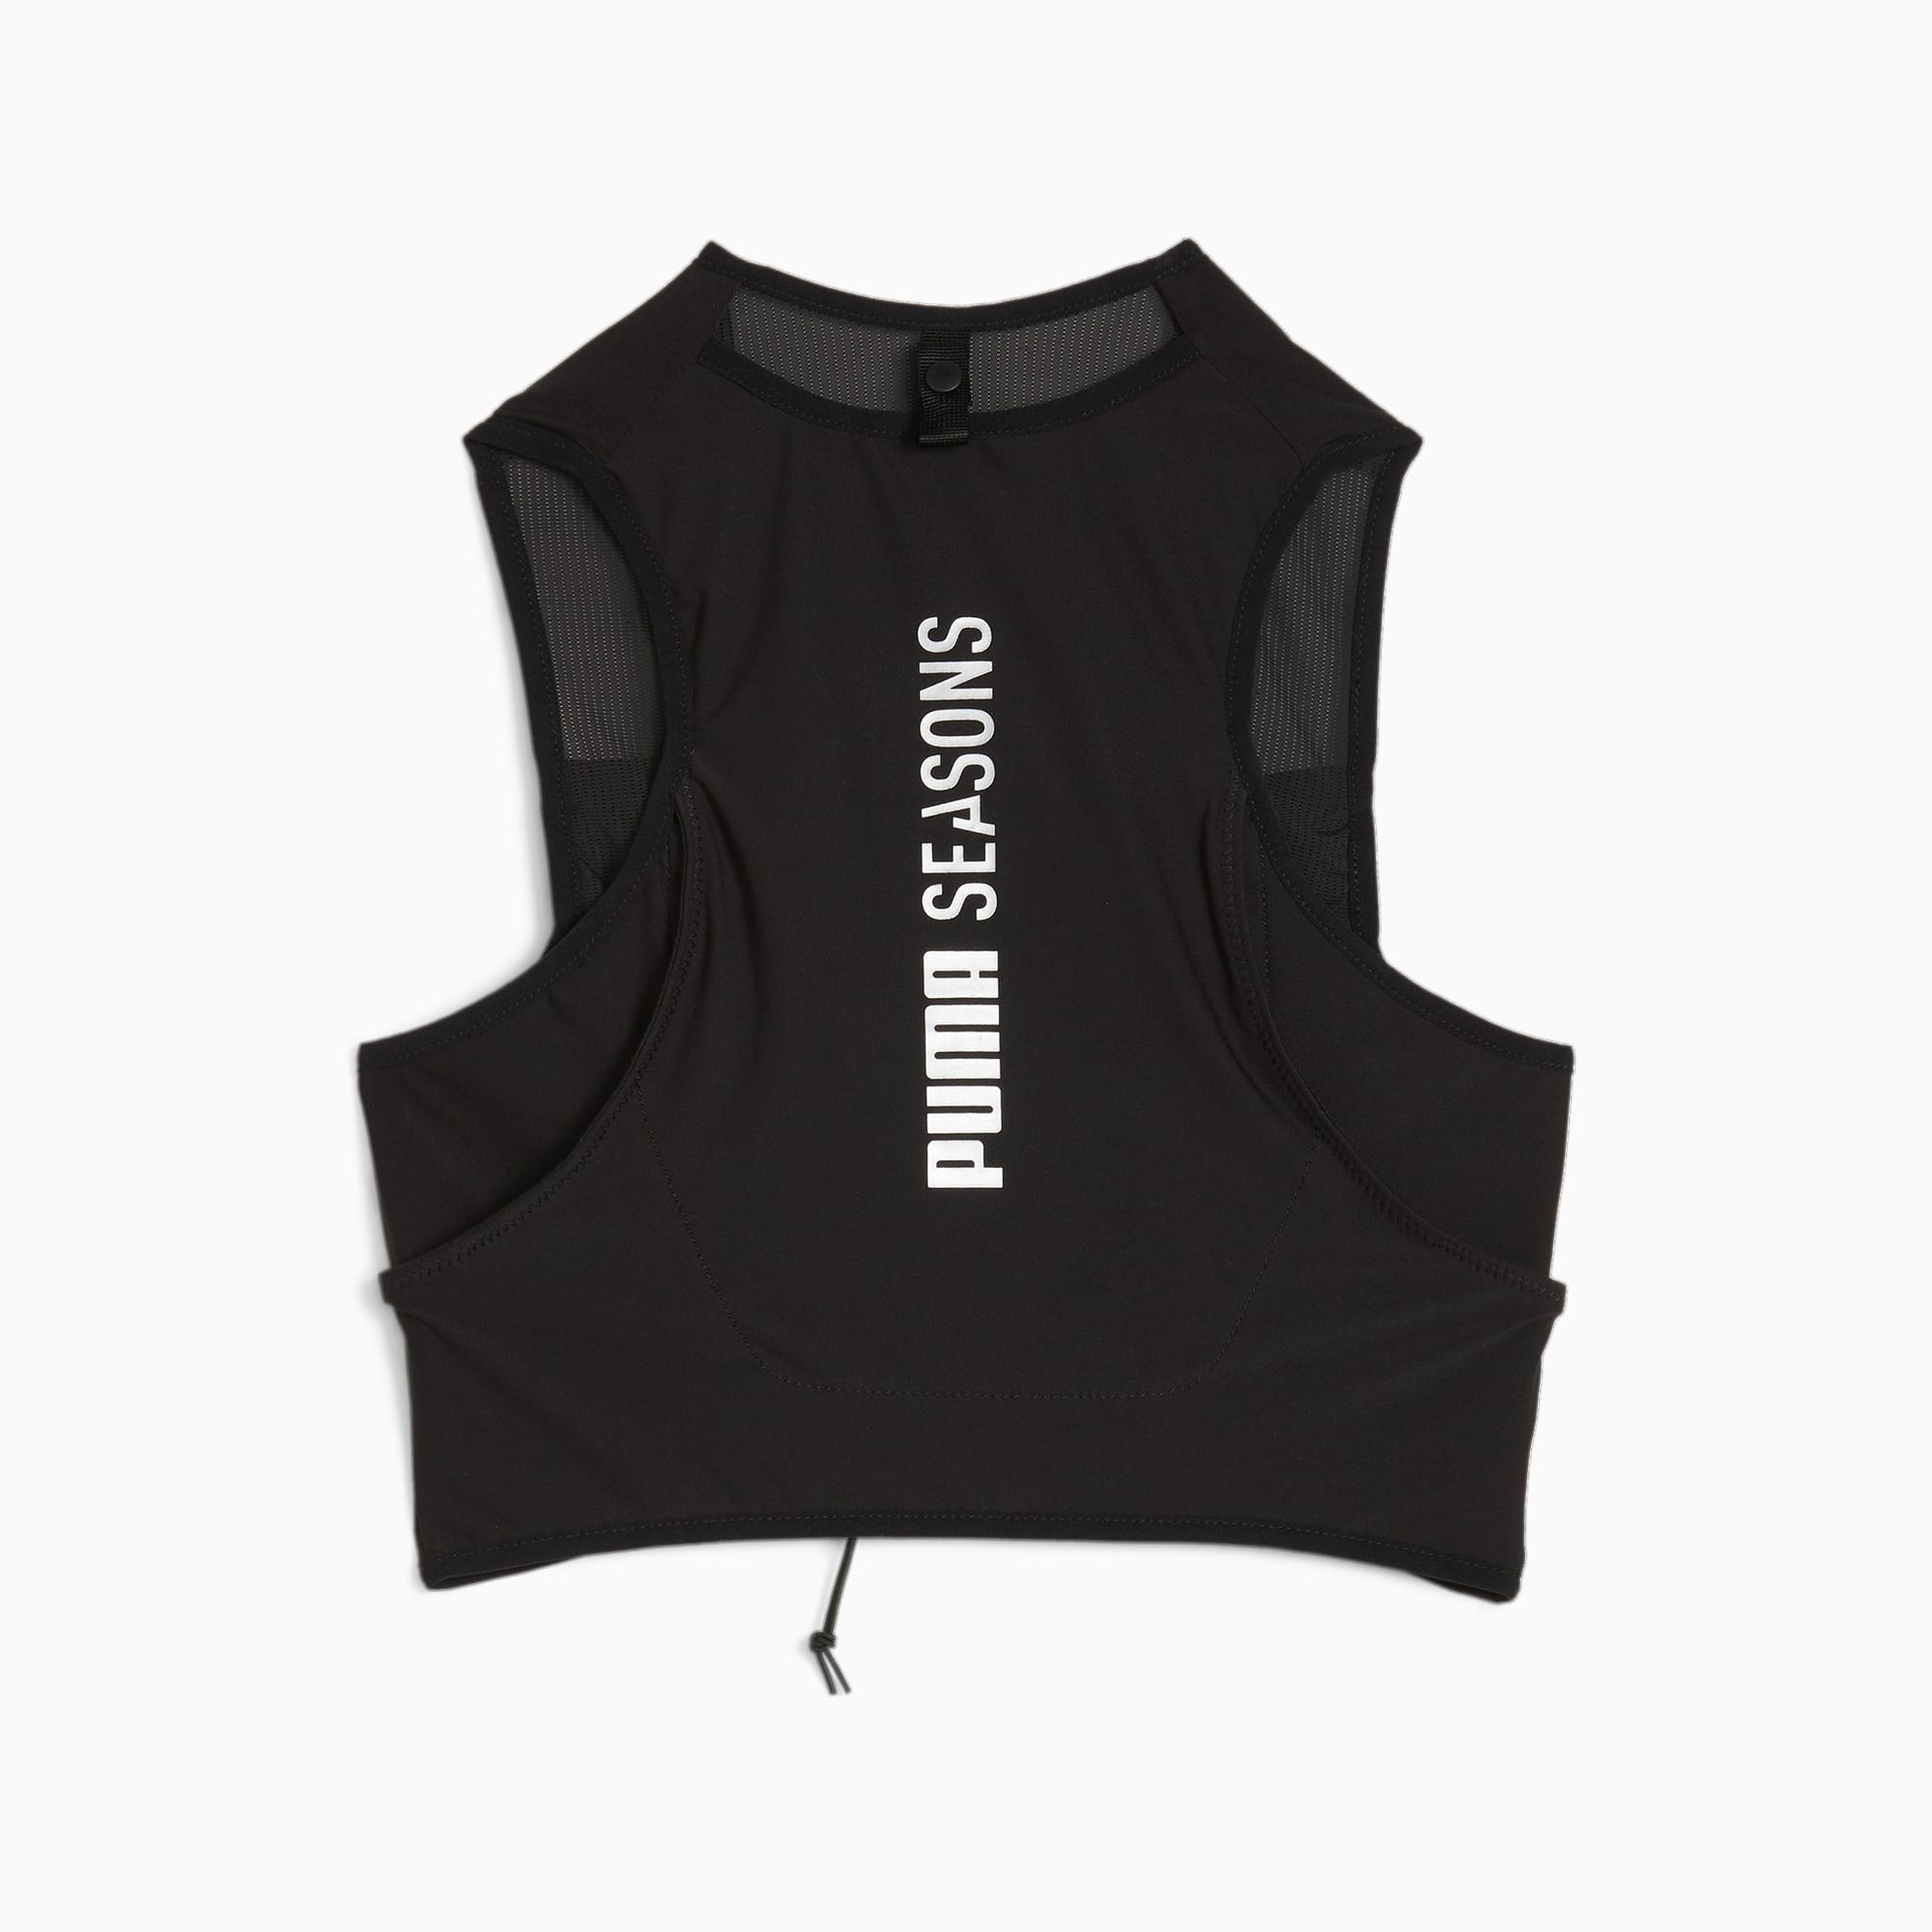 PUMA Seasons Trail Running Vest Women's Jacket, Black, Size M, Clothing